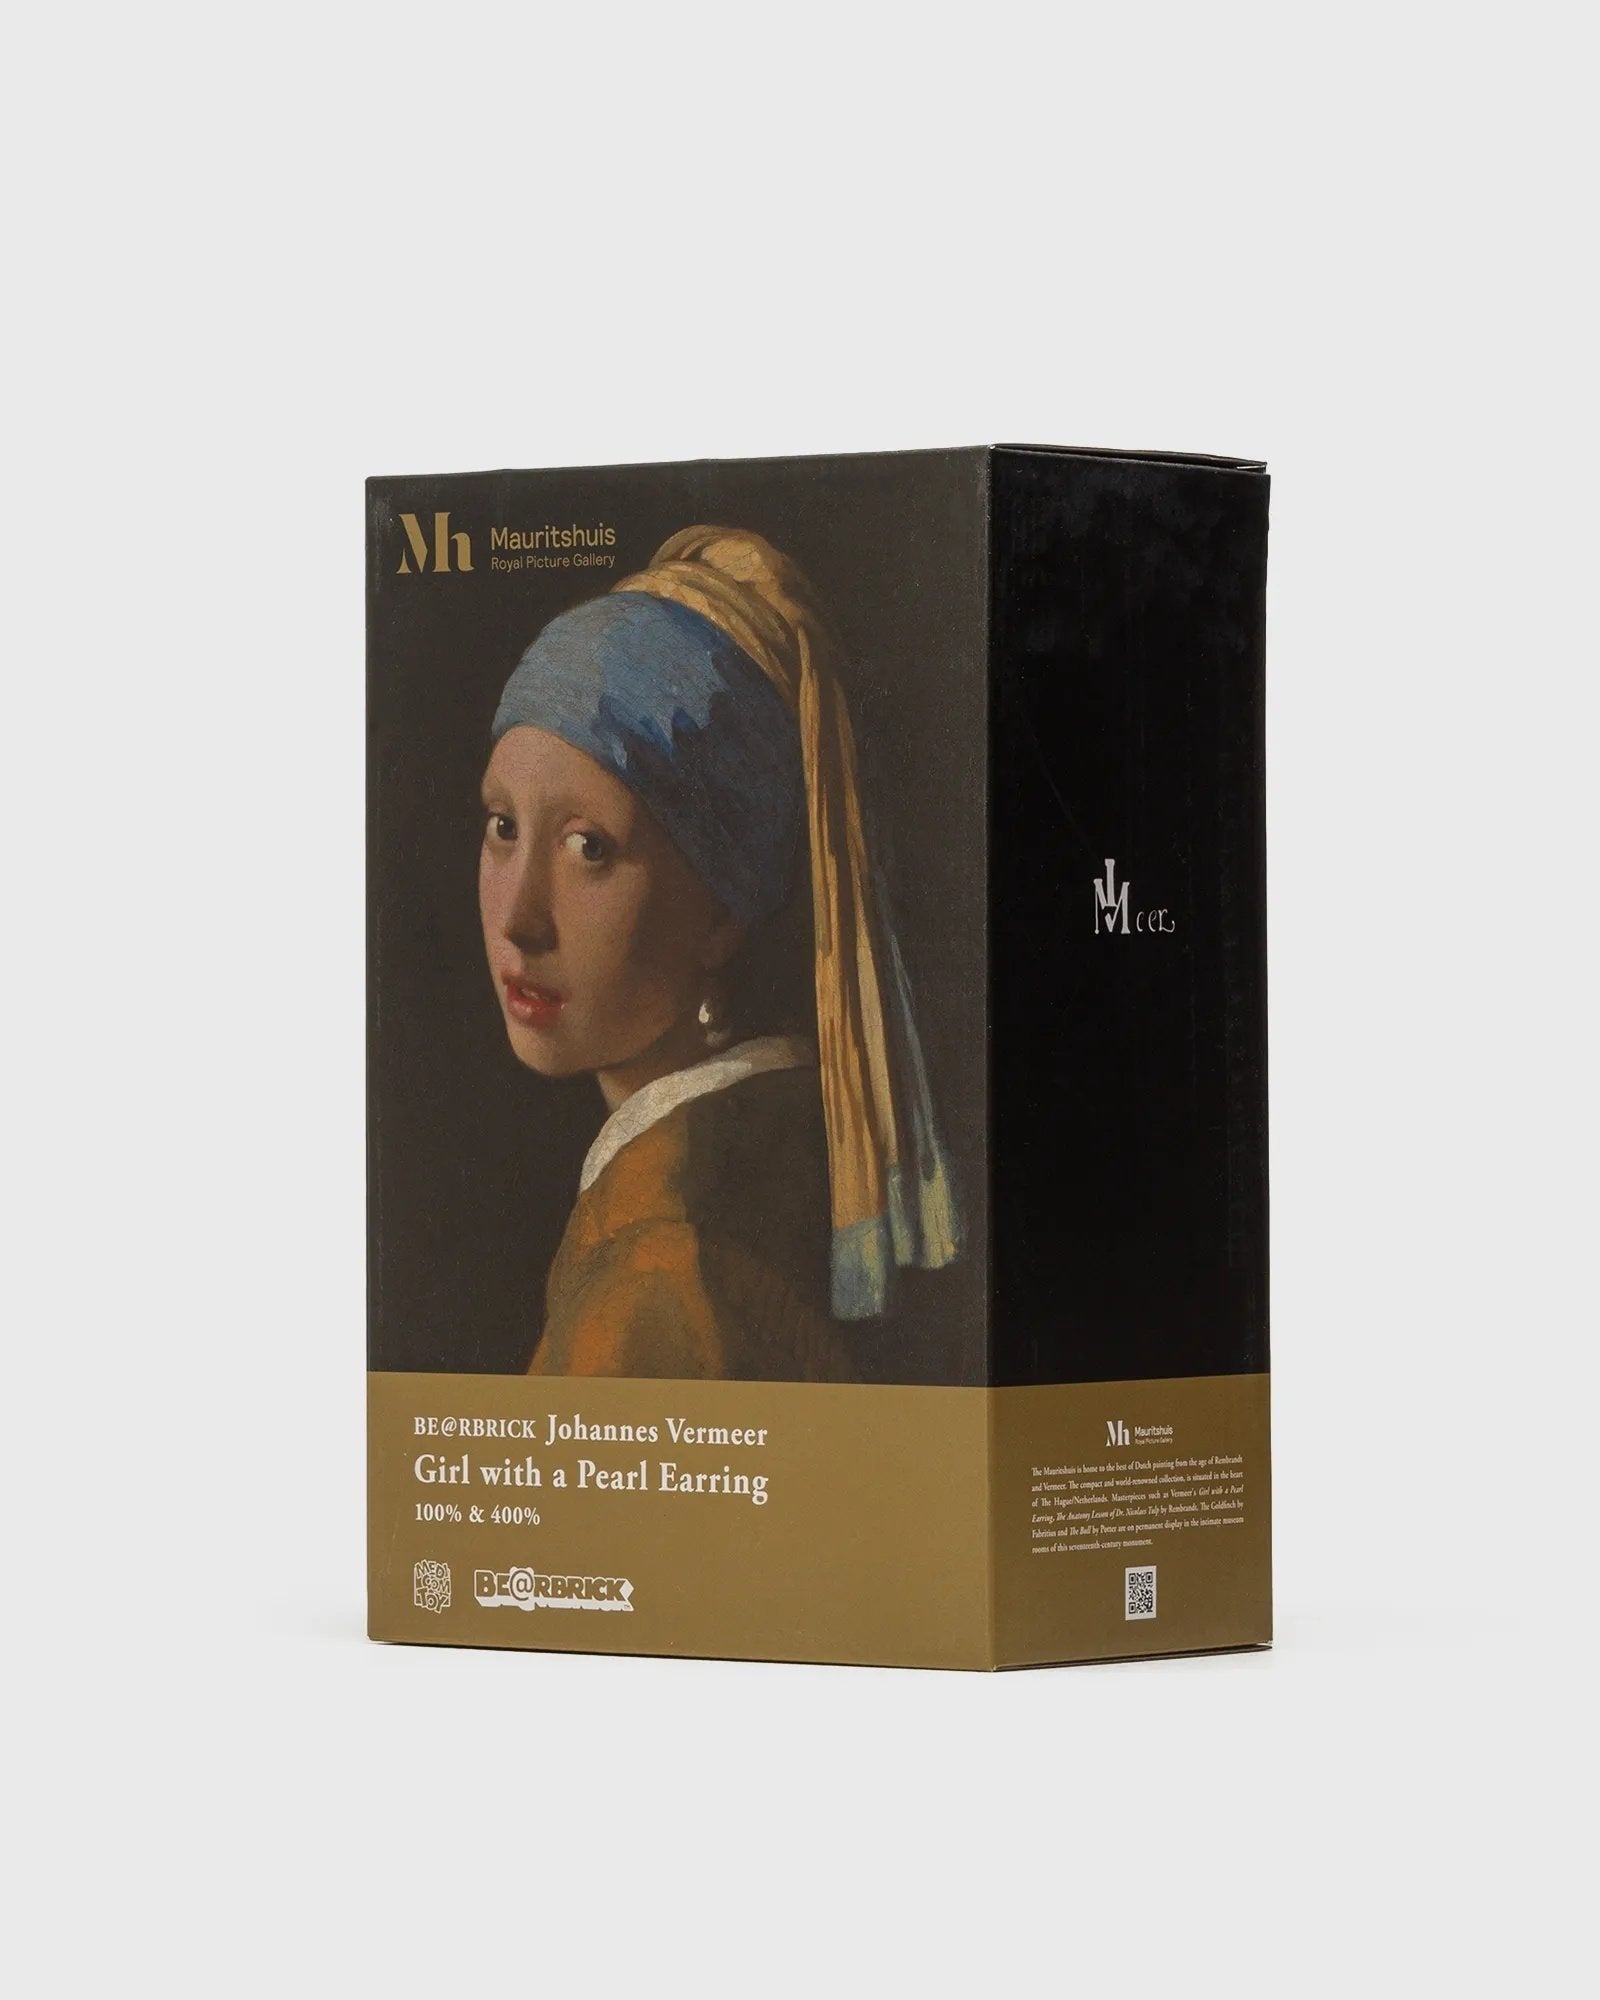 400% u0026 100% Bearbrick set - Girl with a Pearl Earring by Johannes Vermeer